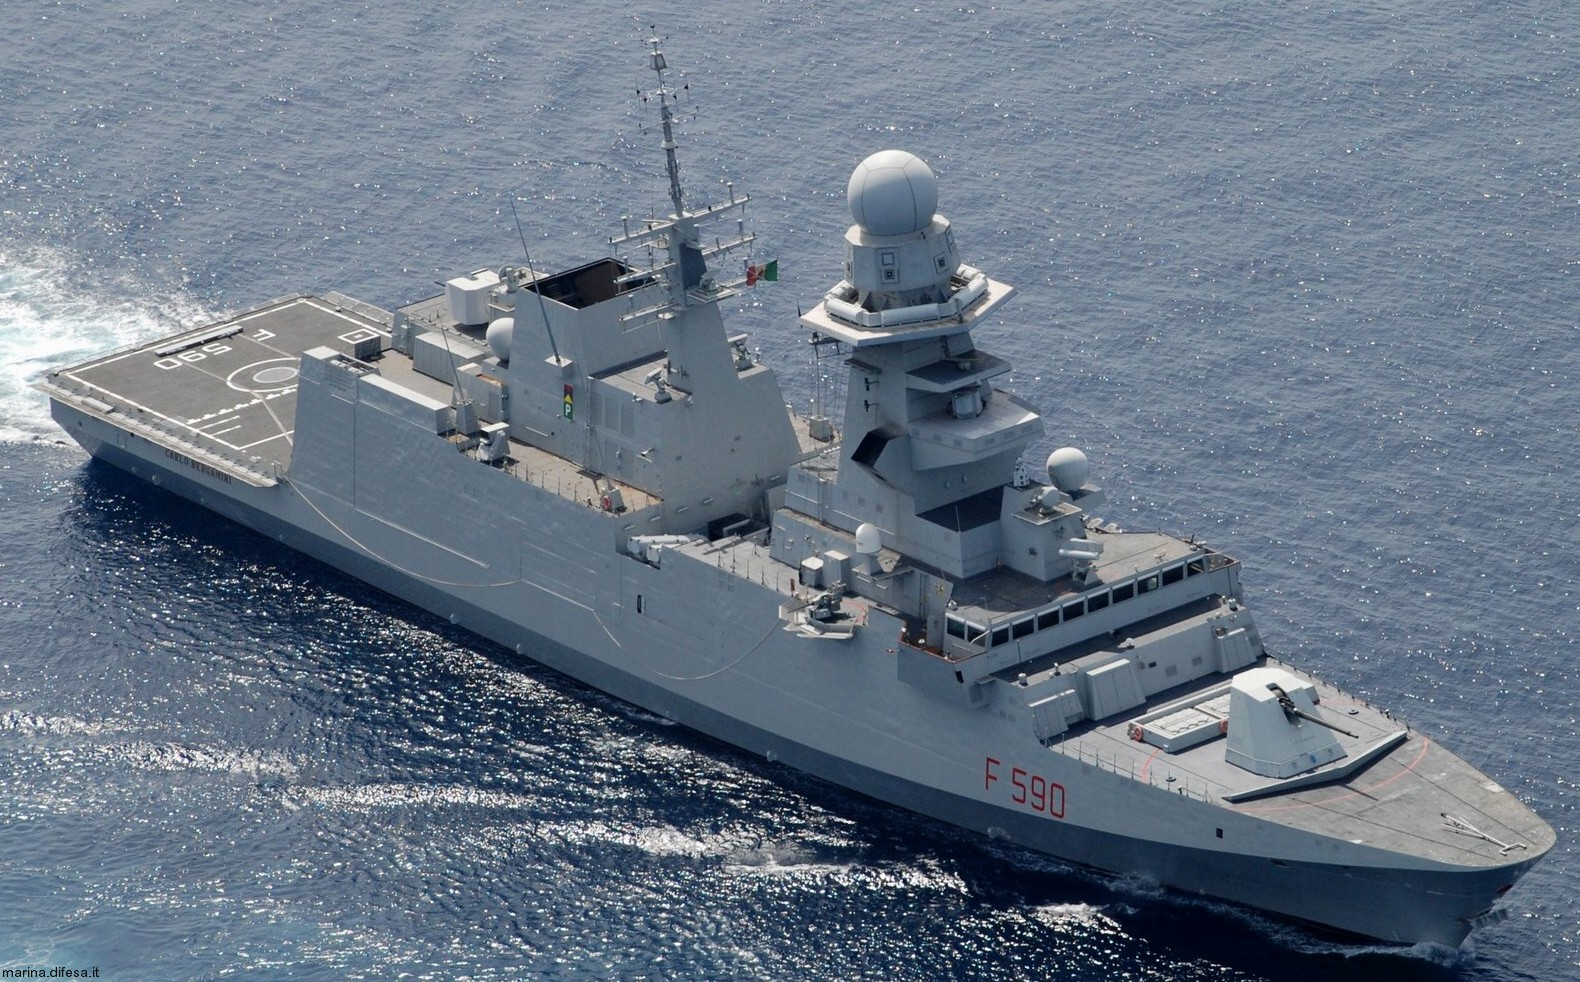 f-590 carlo bergamini its nave fremm class guided missile frigate italian navy marina militare emasoh 51